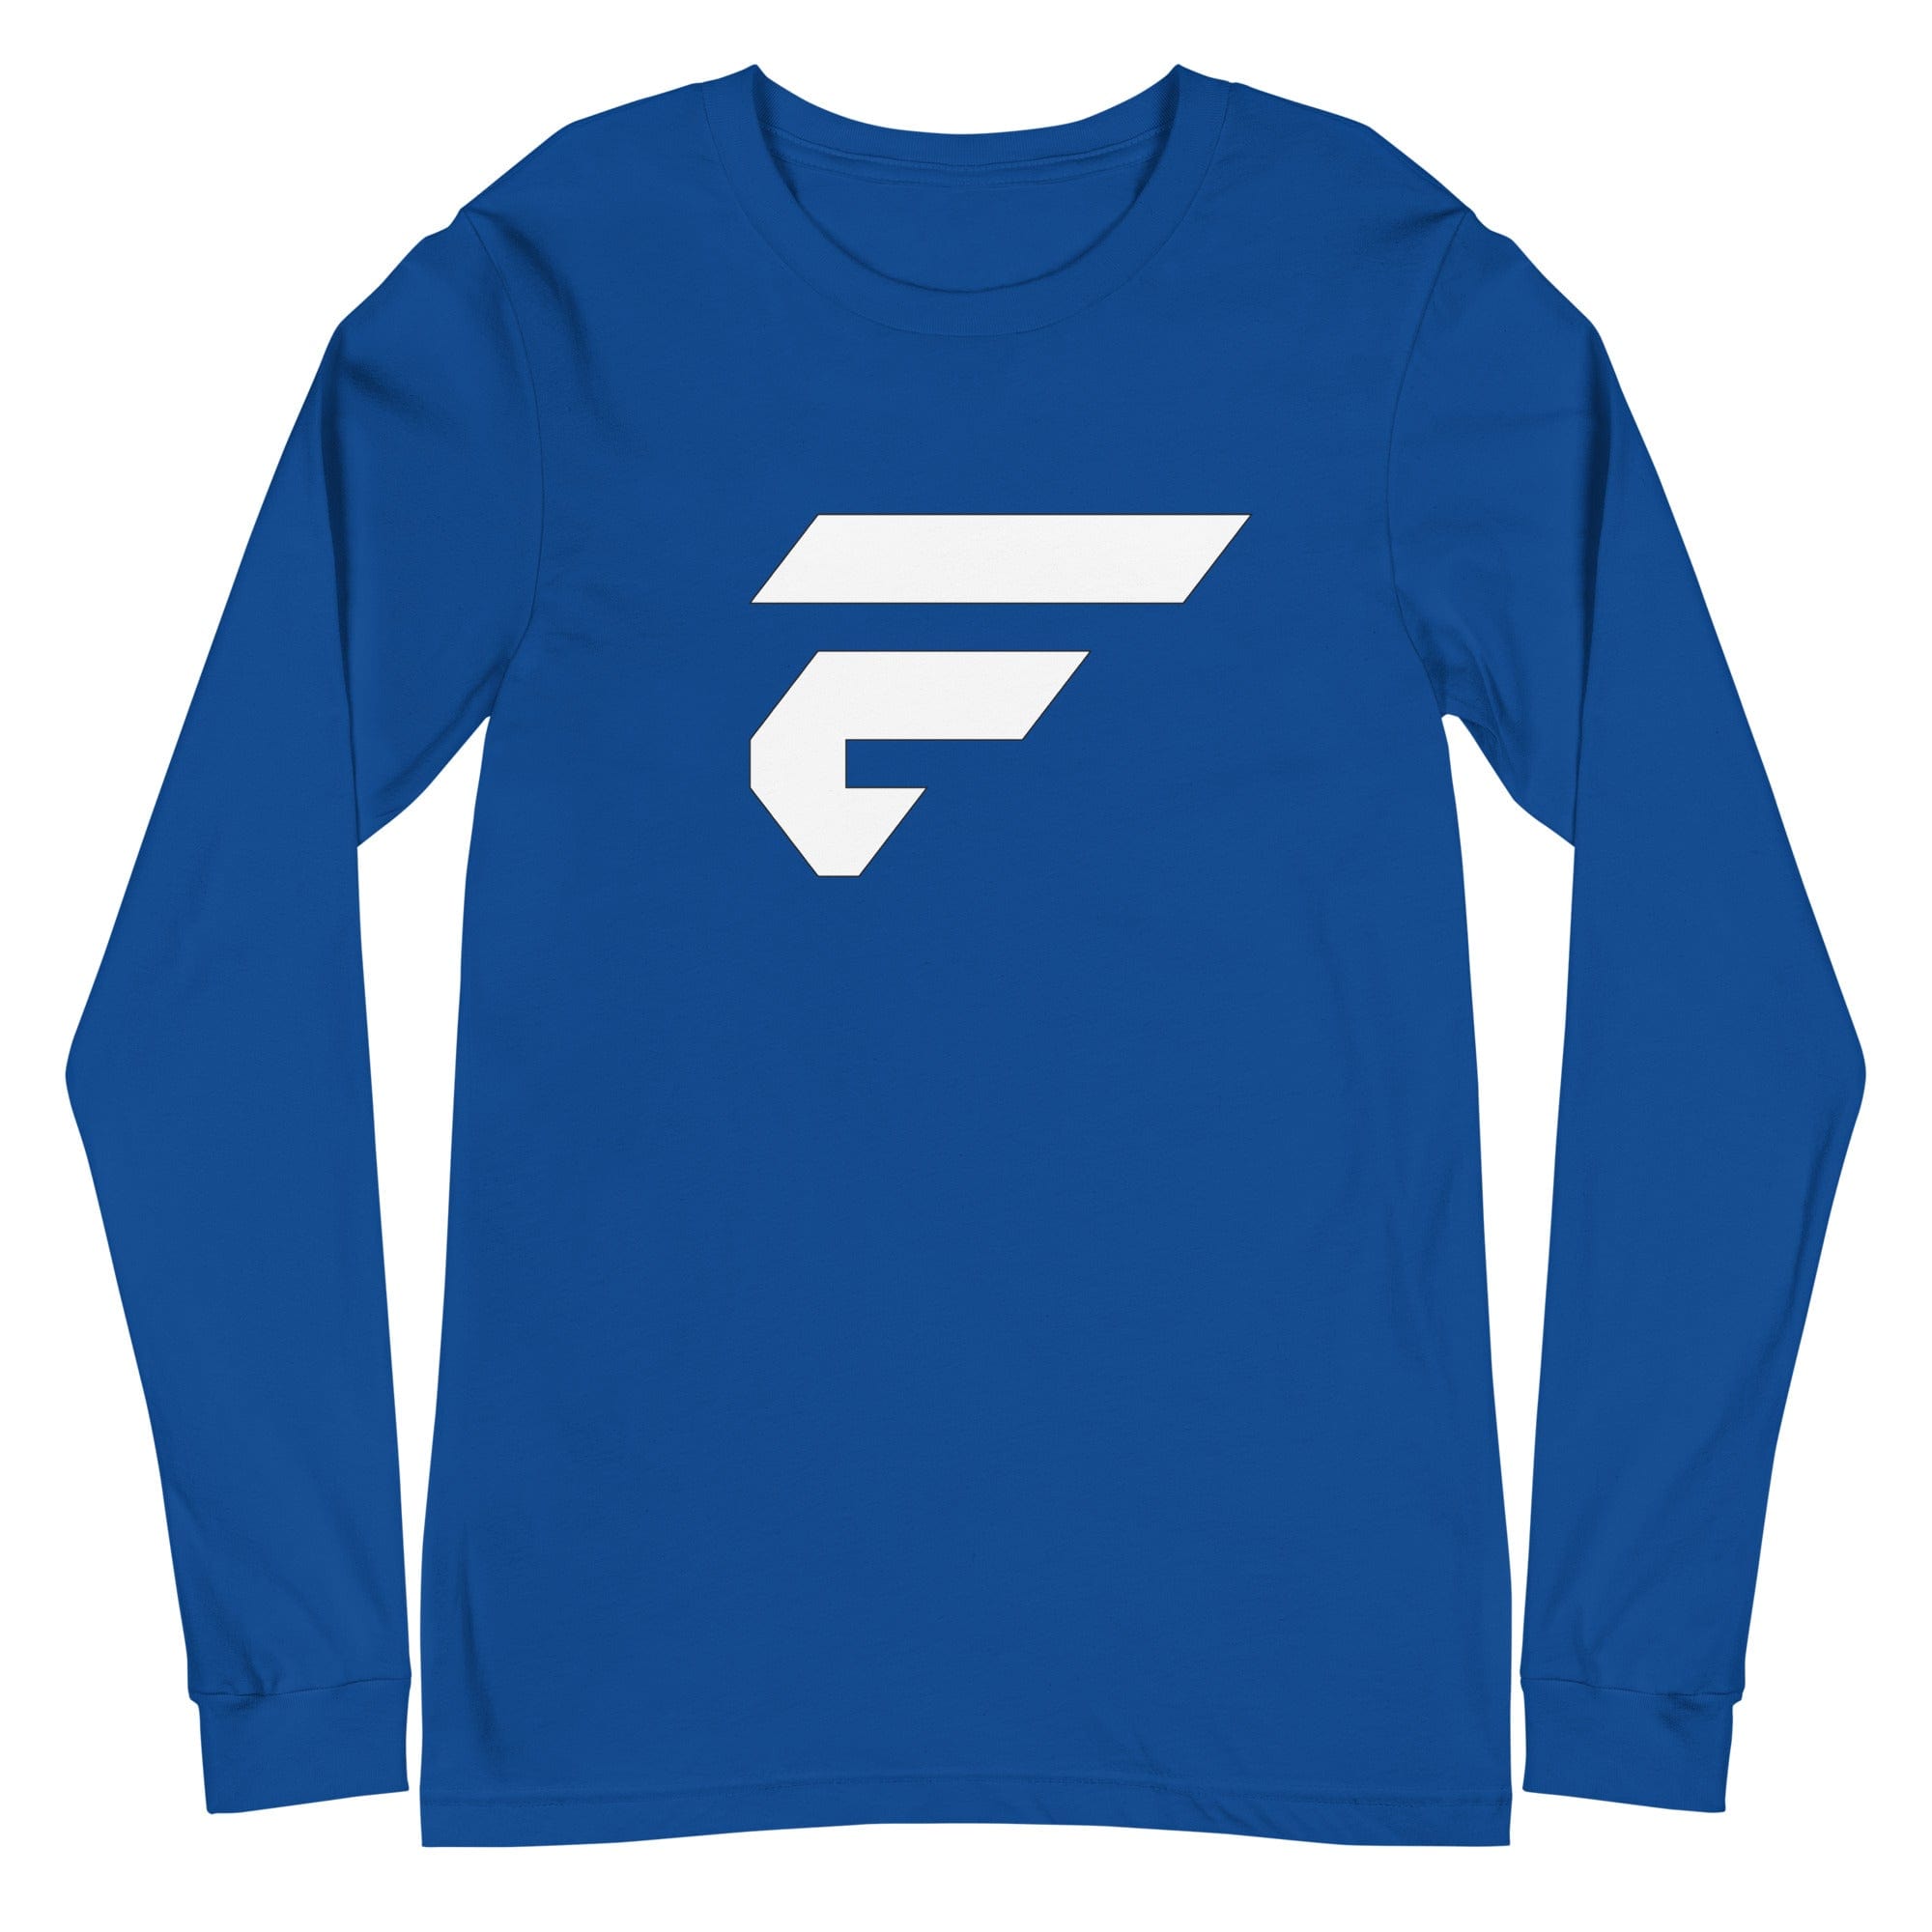 Blue unisex cotton longsleeve shirt with Fire Cornhole F logo in white